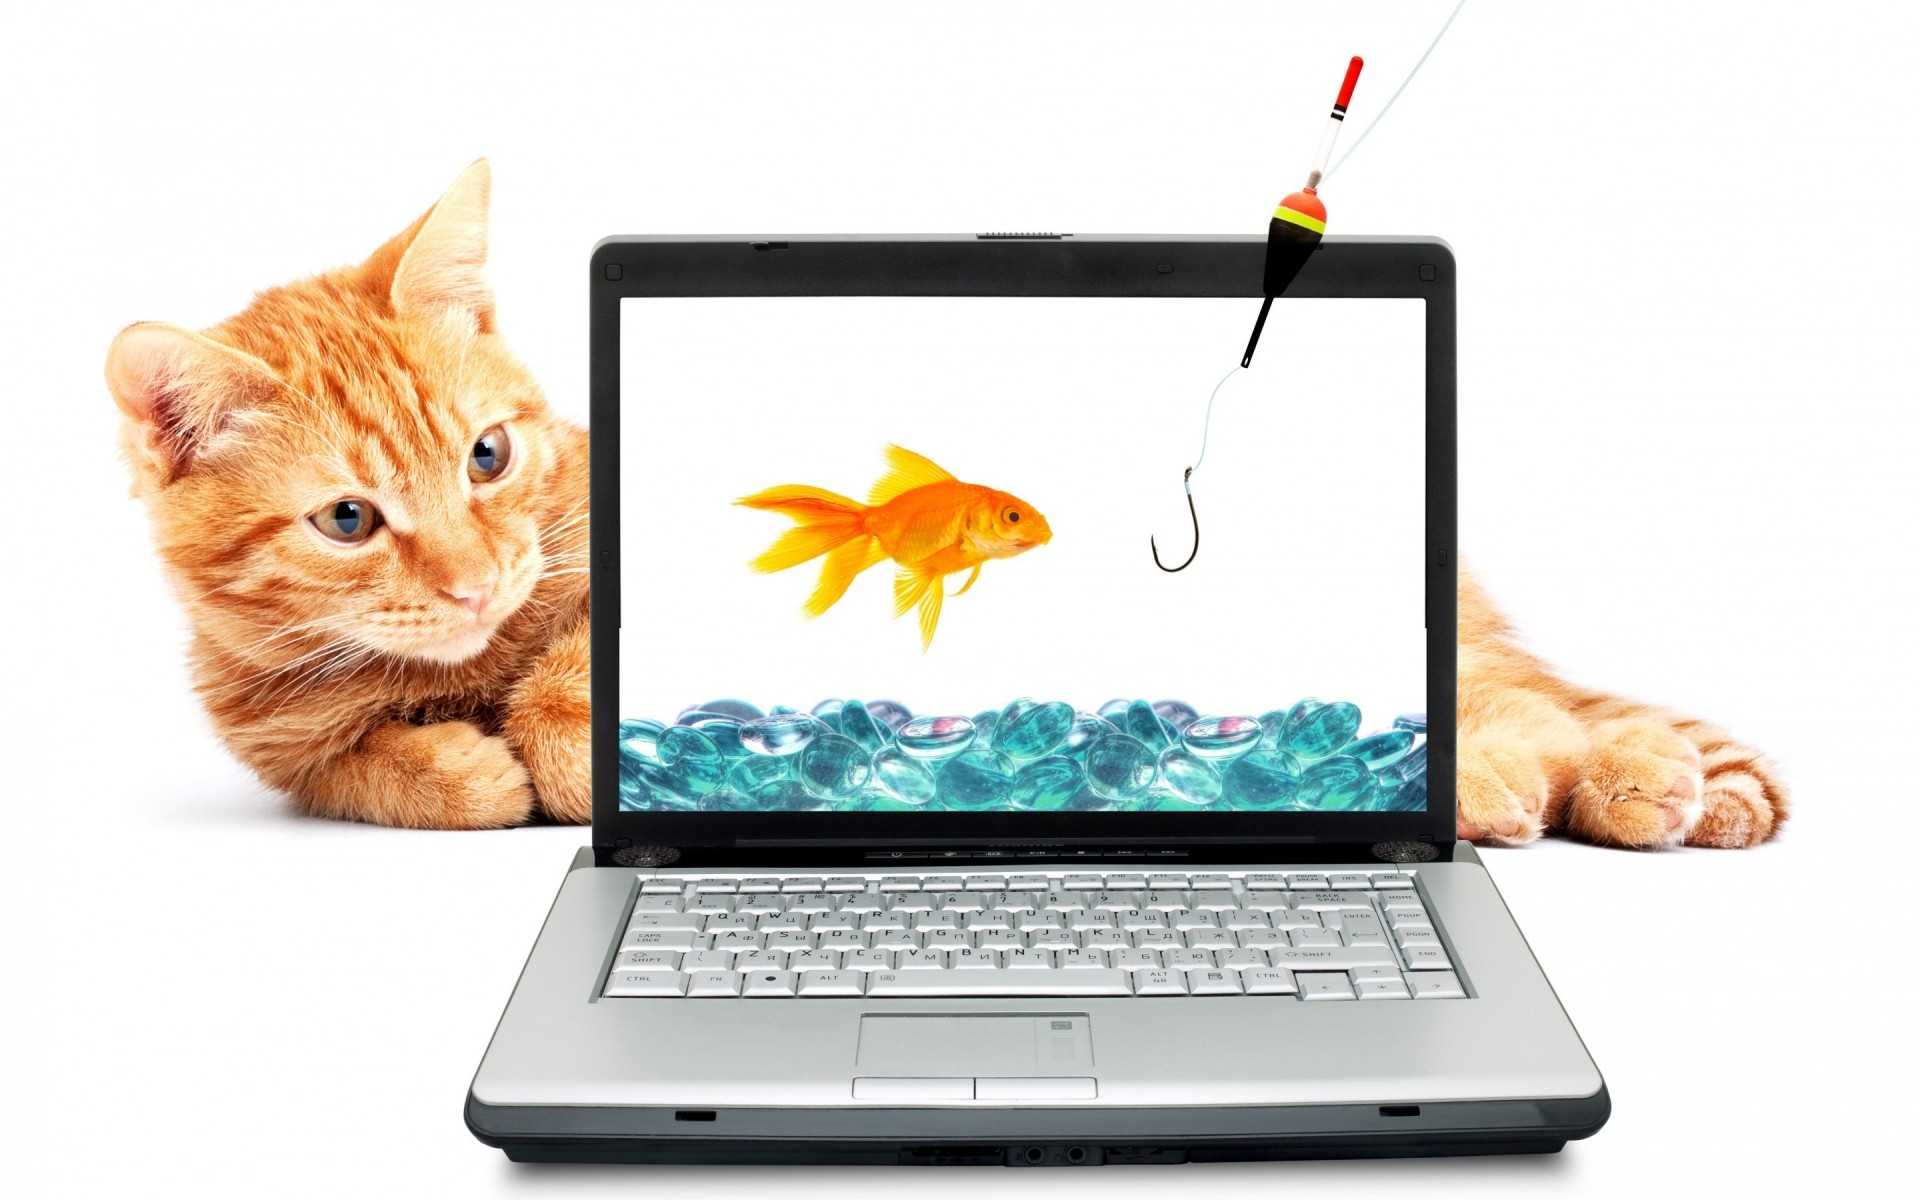 Рыбки для котят на экране онлайн - все про домашних животных